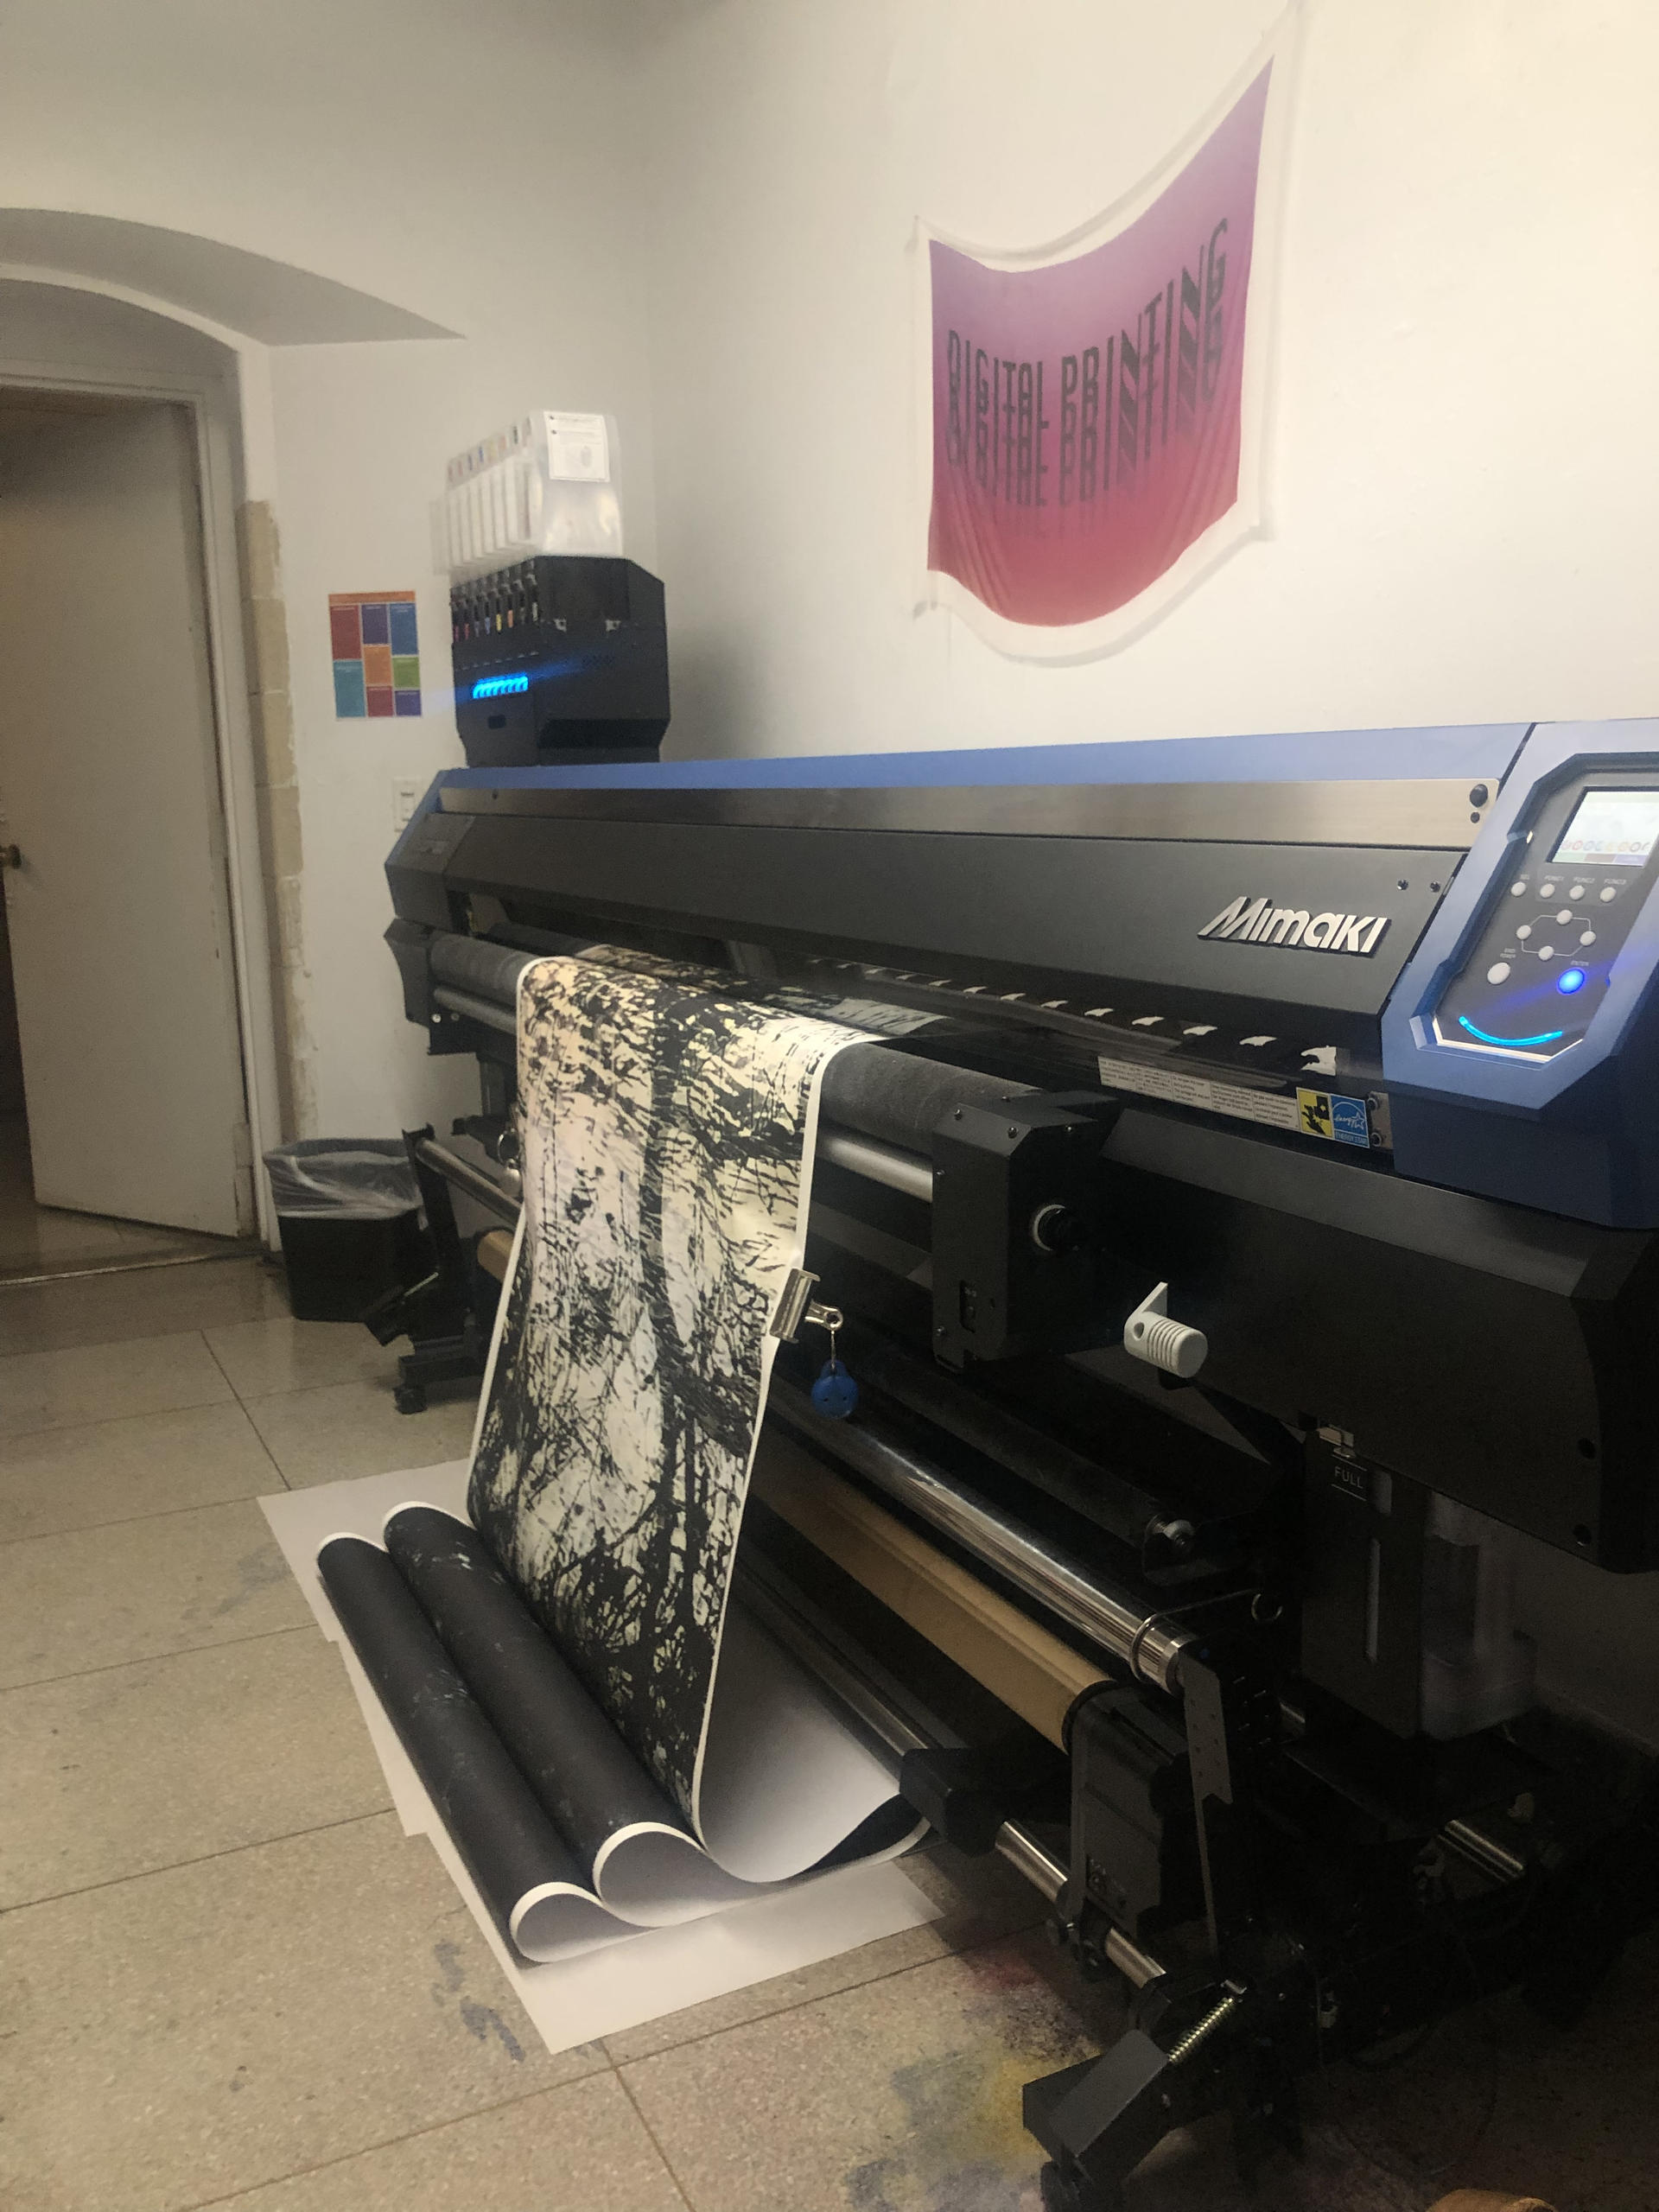 Fabric digitally printing on Mimaki